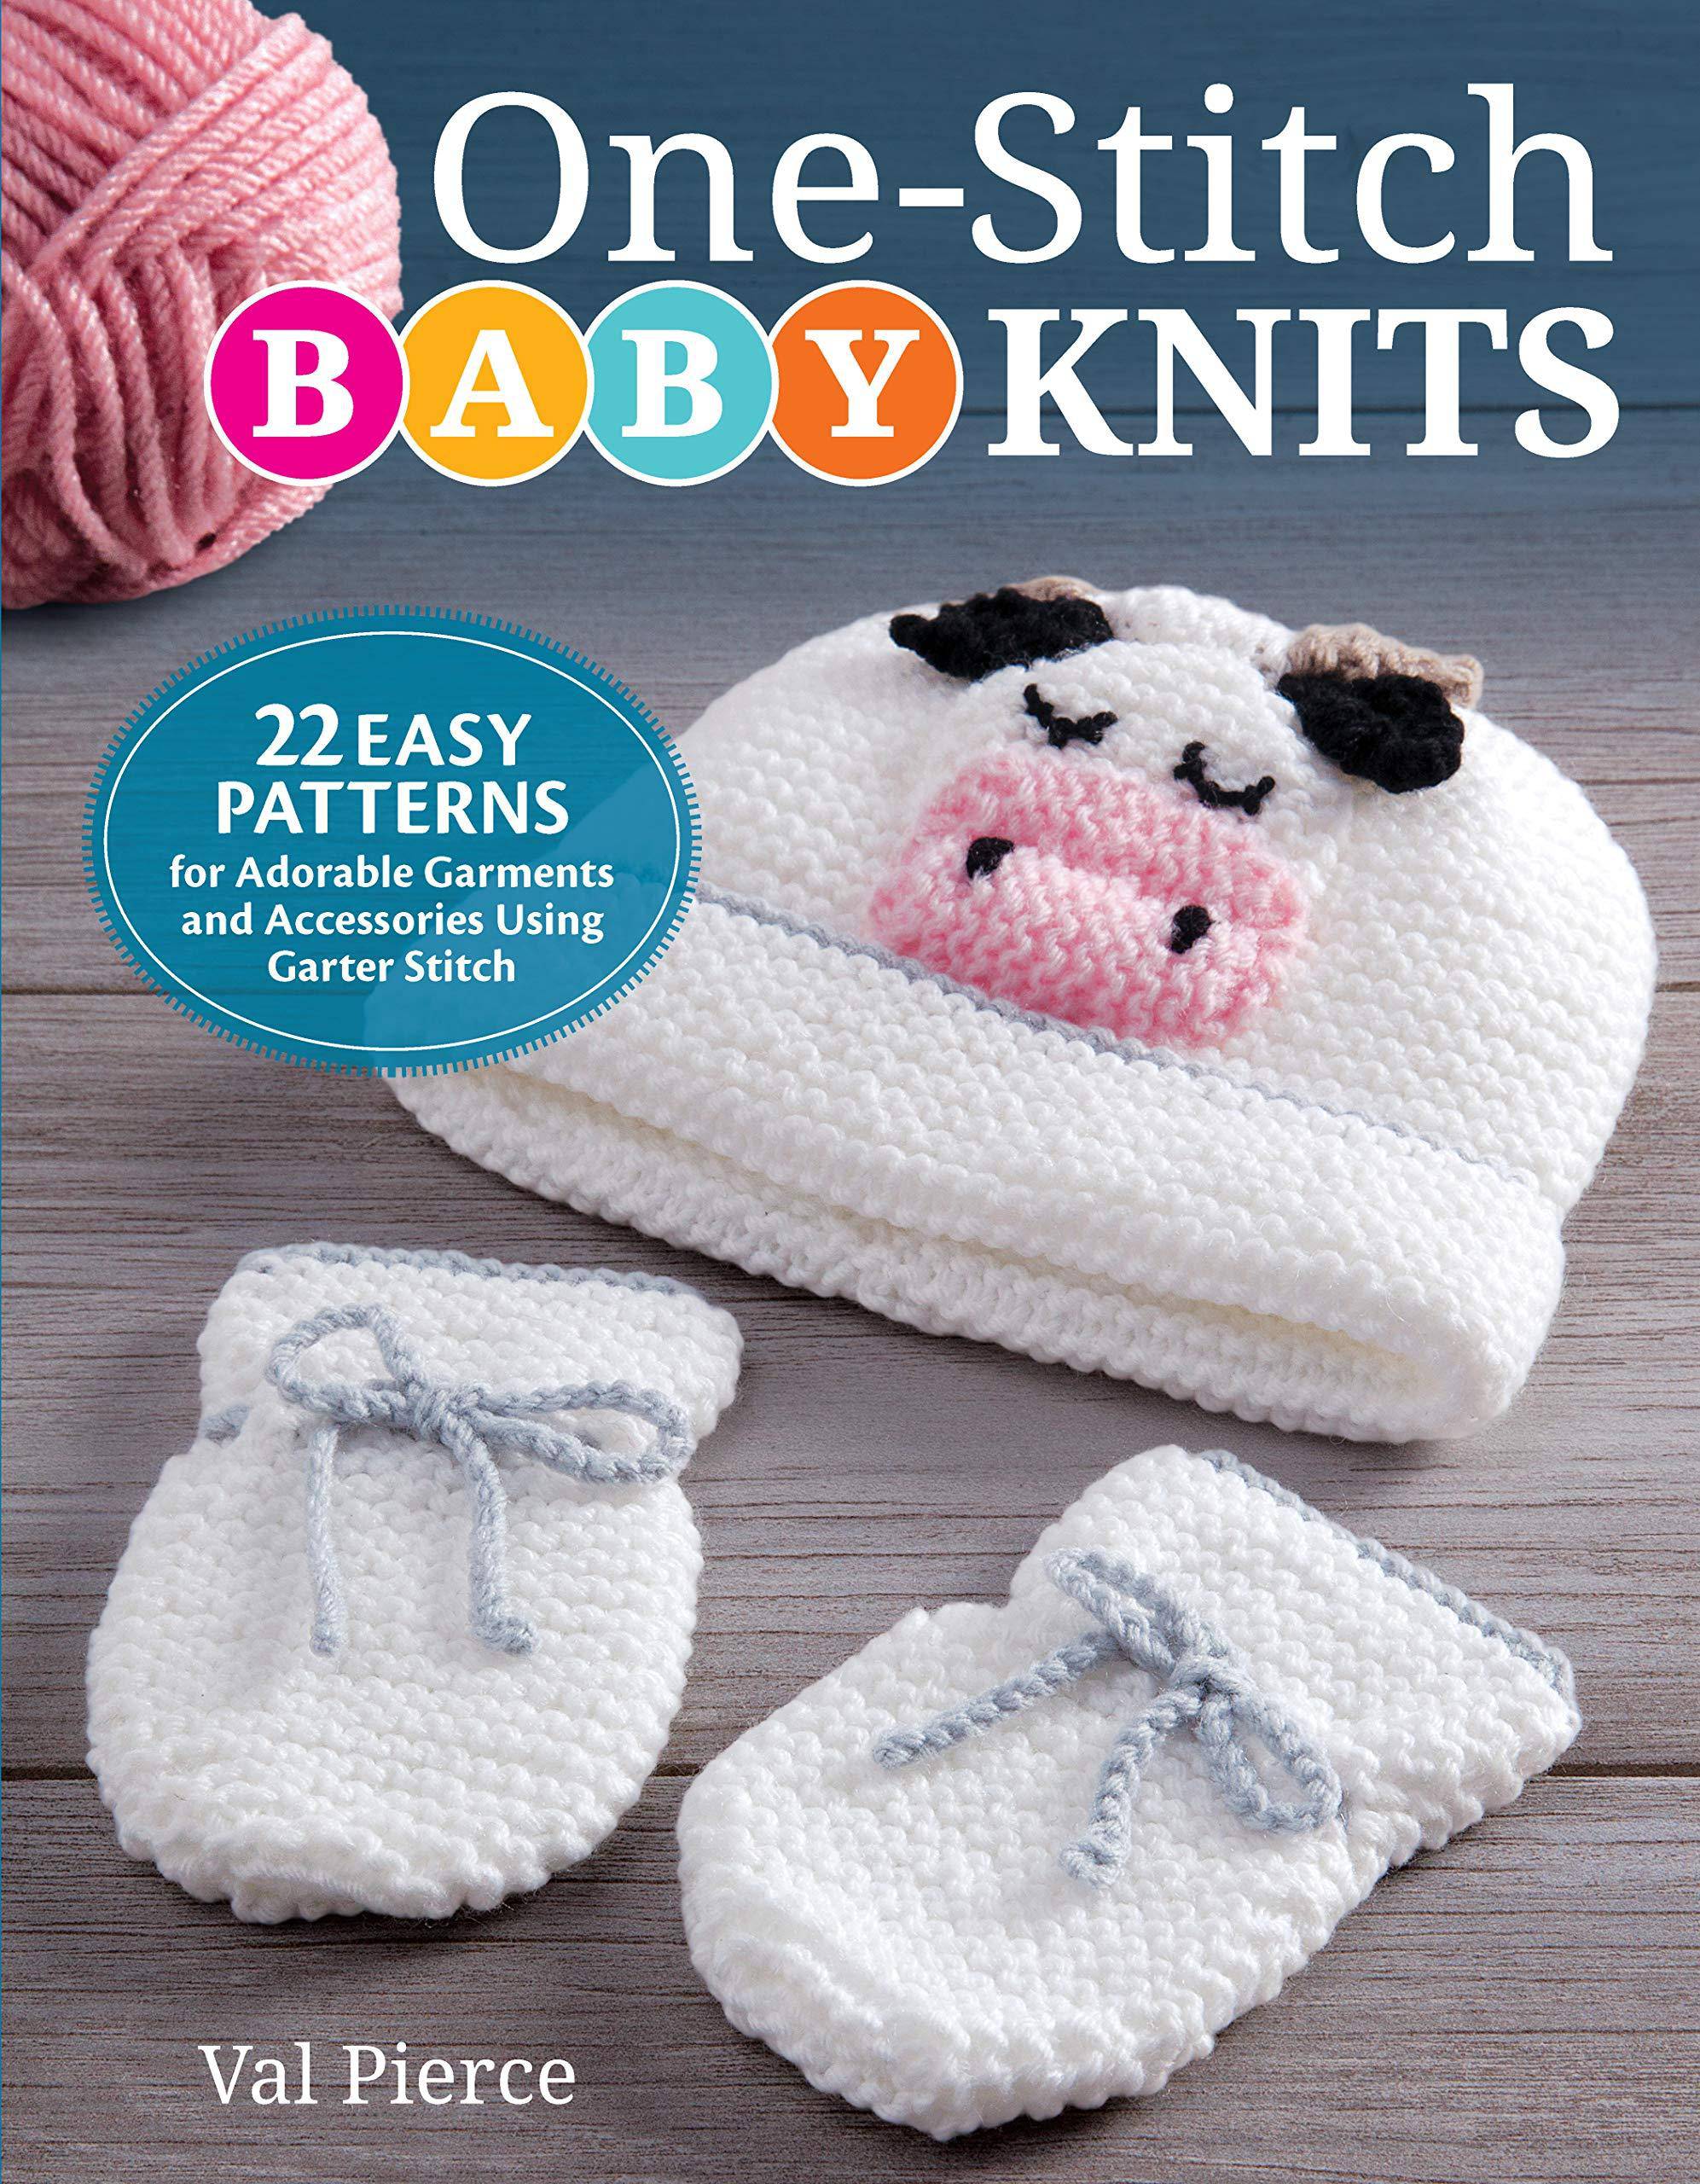 One-Stitch Baby Knits - SureShot Books Publishing LLC